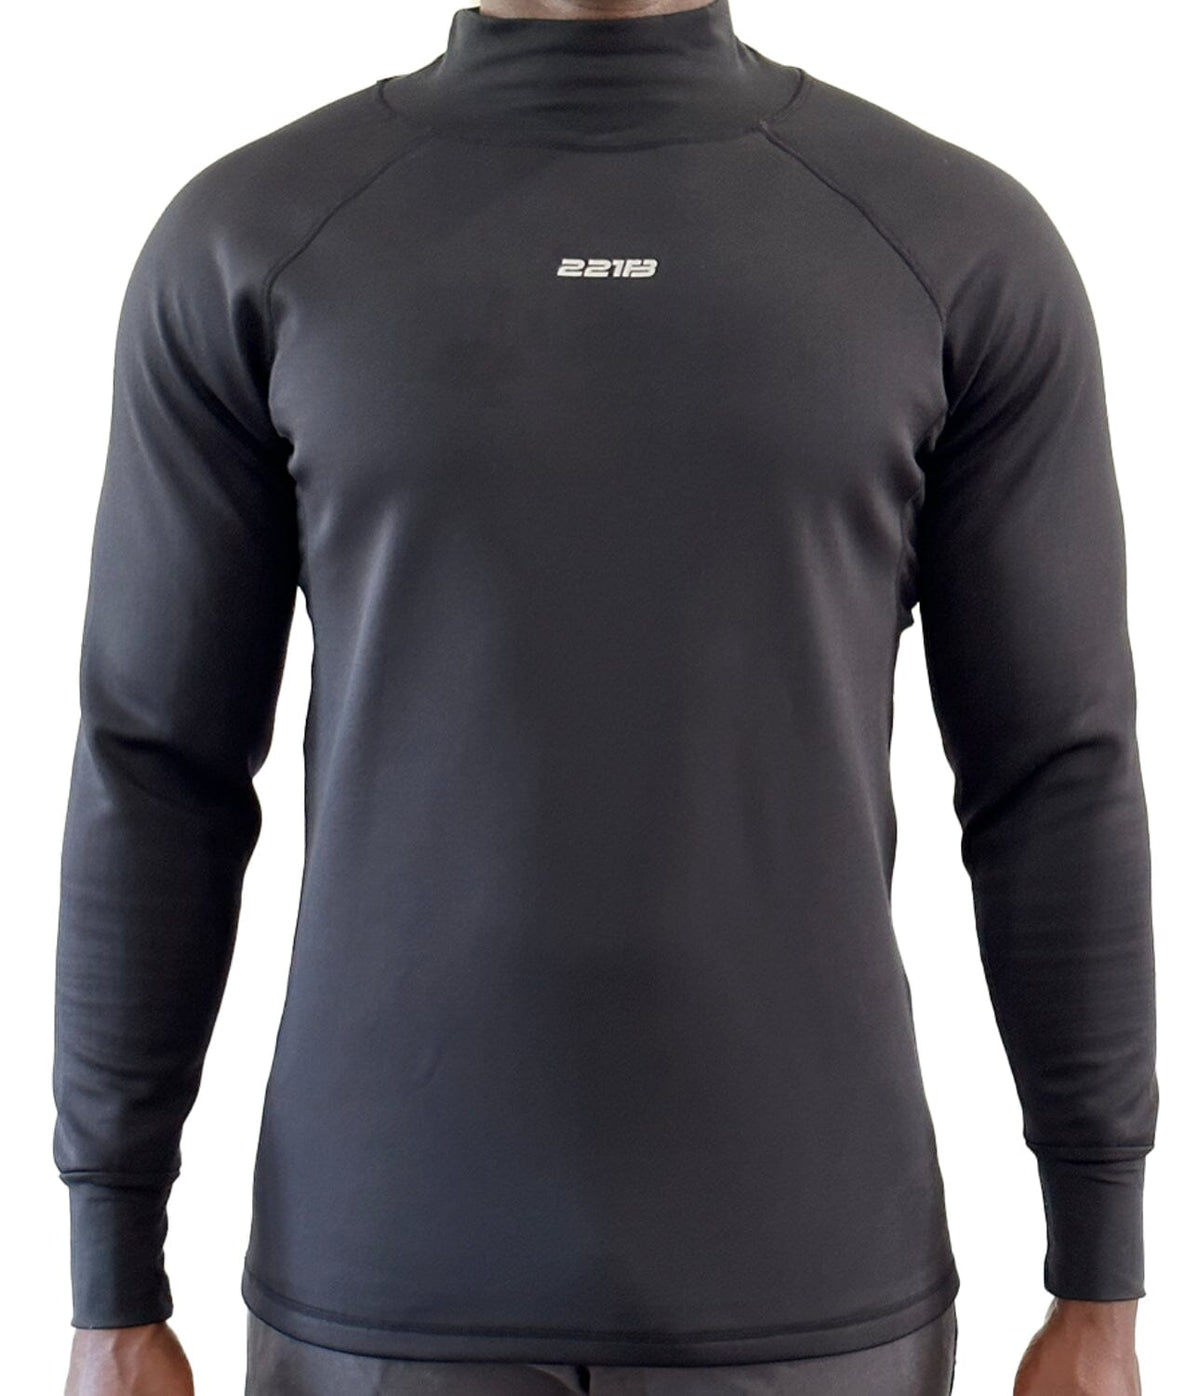 Ultima Black V Neck Body Warmer Thermal Wear TOP -Upper for Men Pack of 1